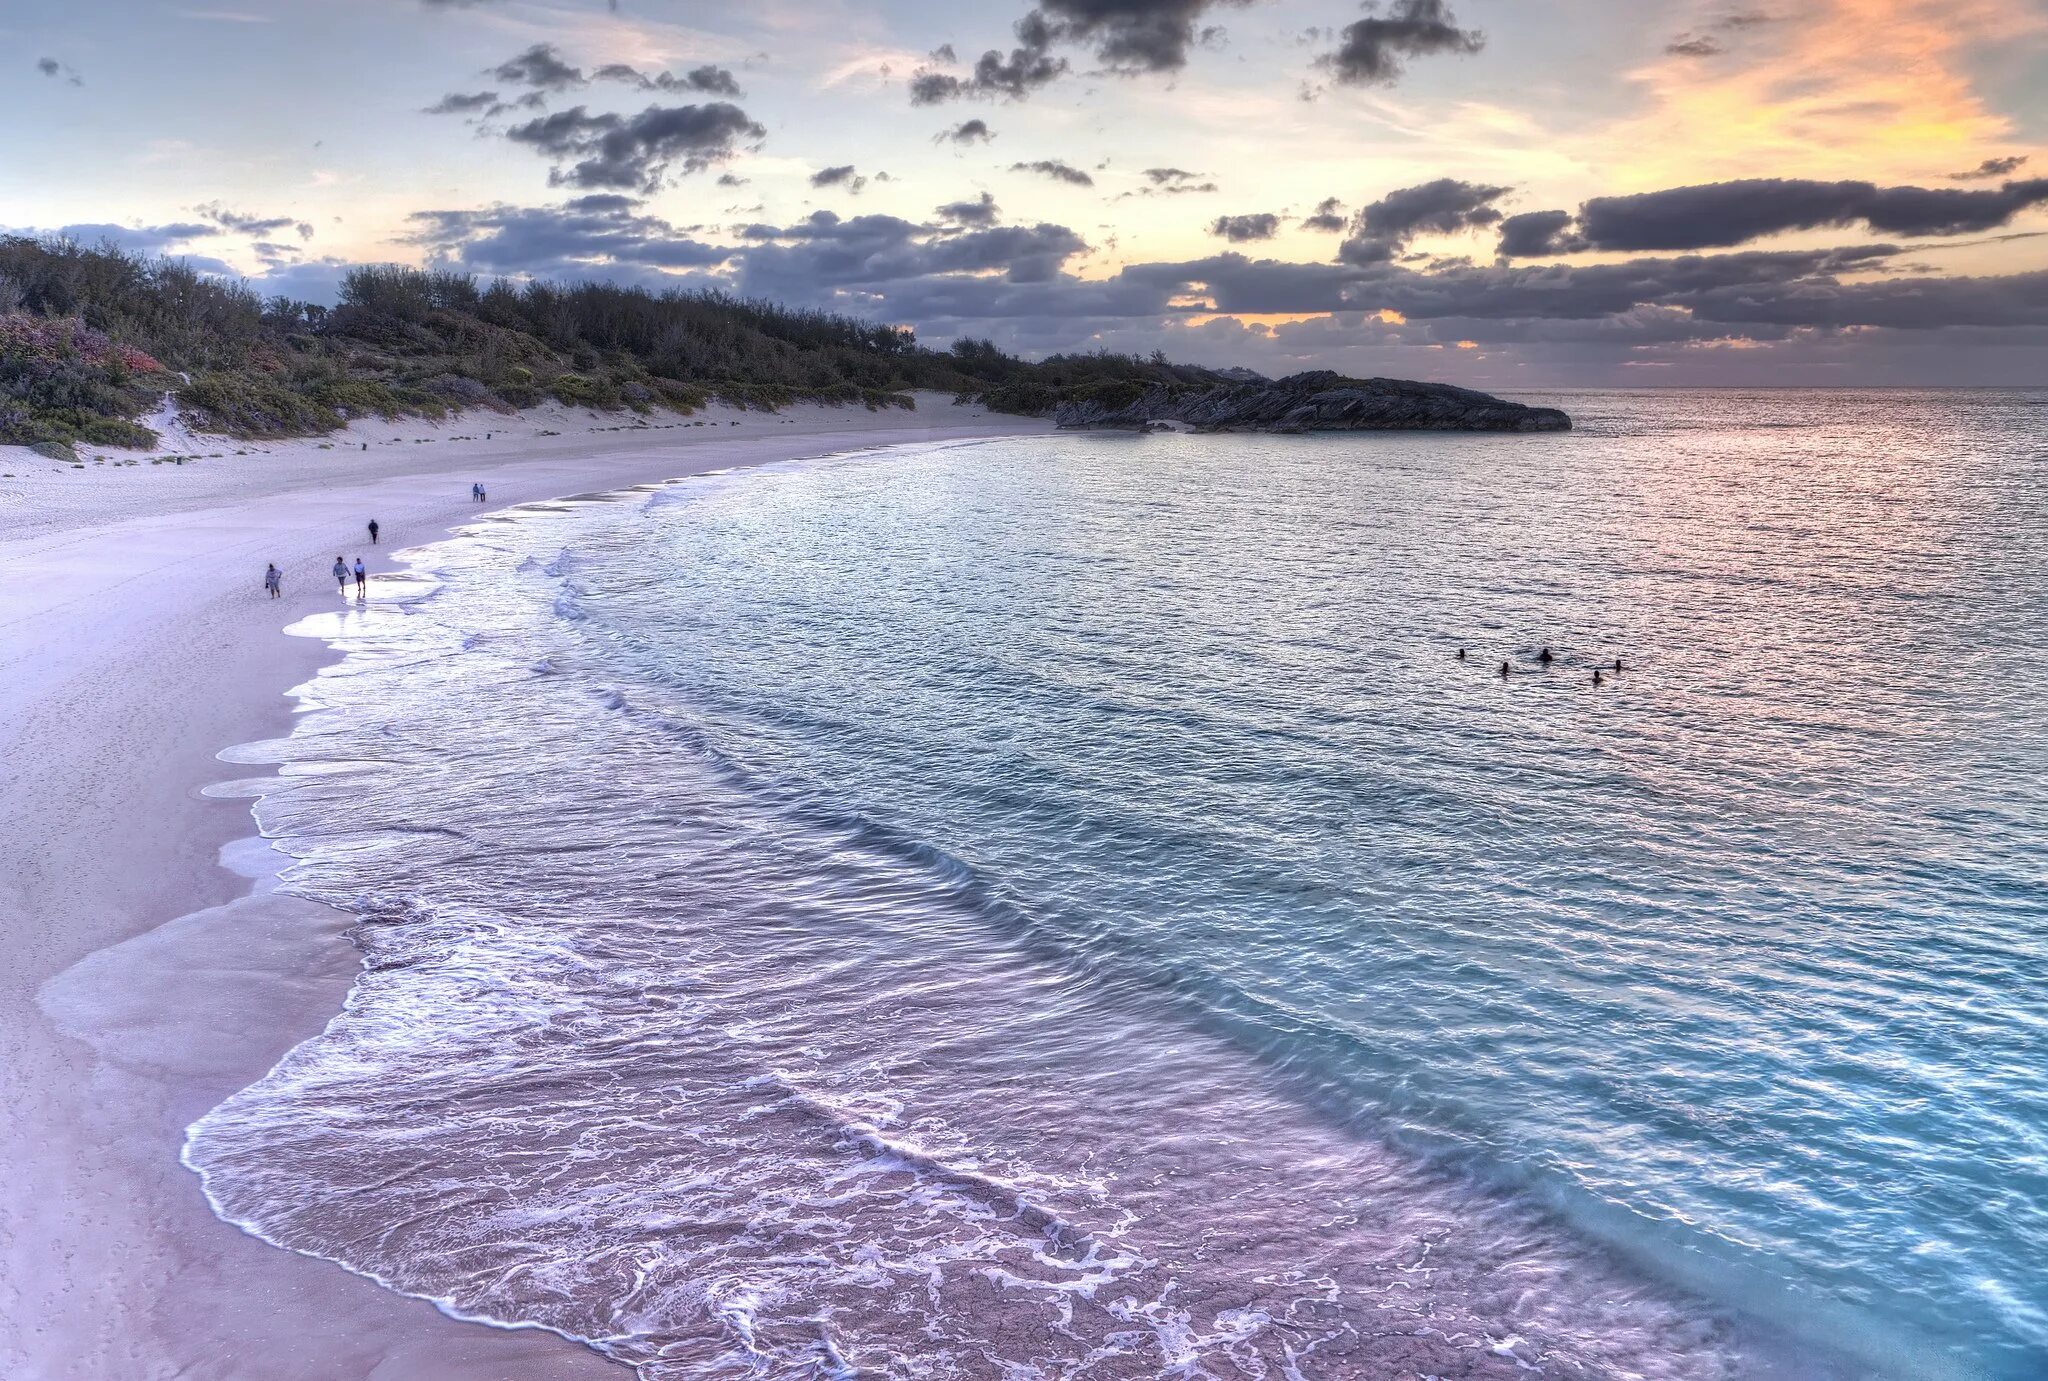 Harbor island. Пляж Пинк-Сэнд-Бич, Харбор, Багамские острова. Pink Sands Beach Багамские острова. Розовый пляж Пинк Сэндс Бич, Багамские острова. Розовый пляж. Остров Харбор, Багамы.